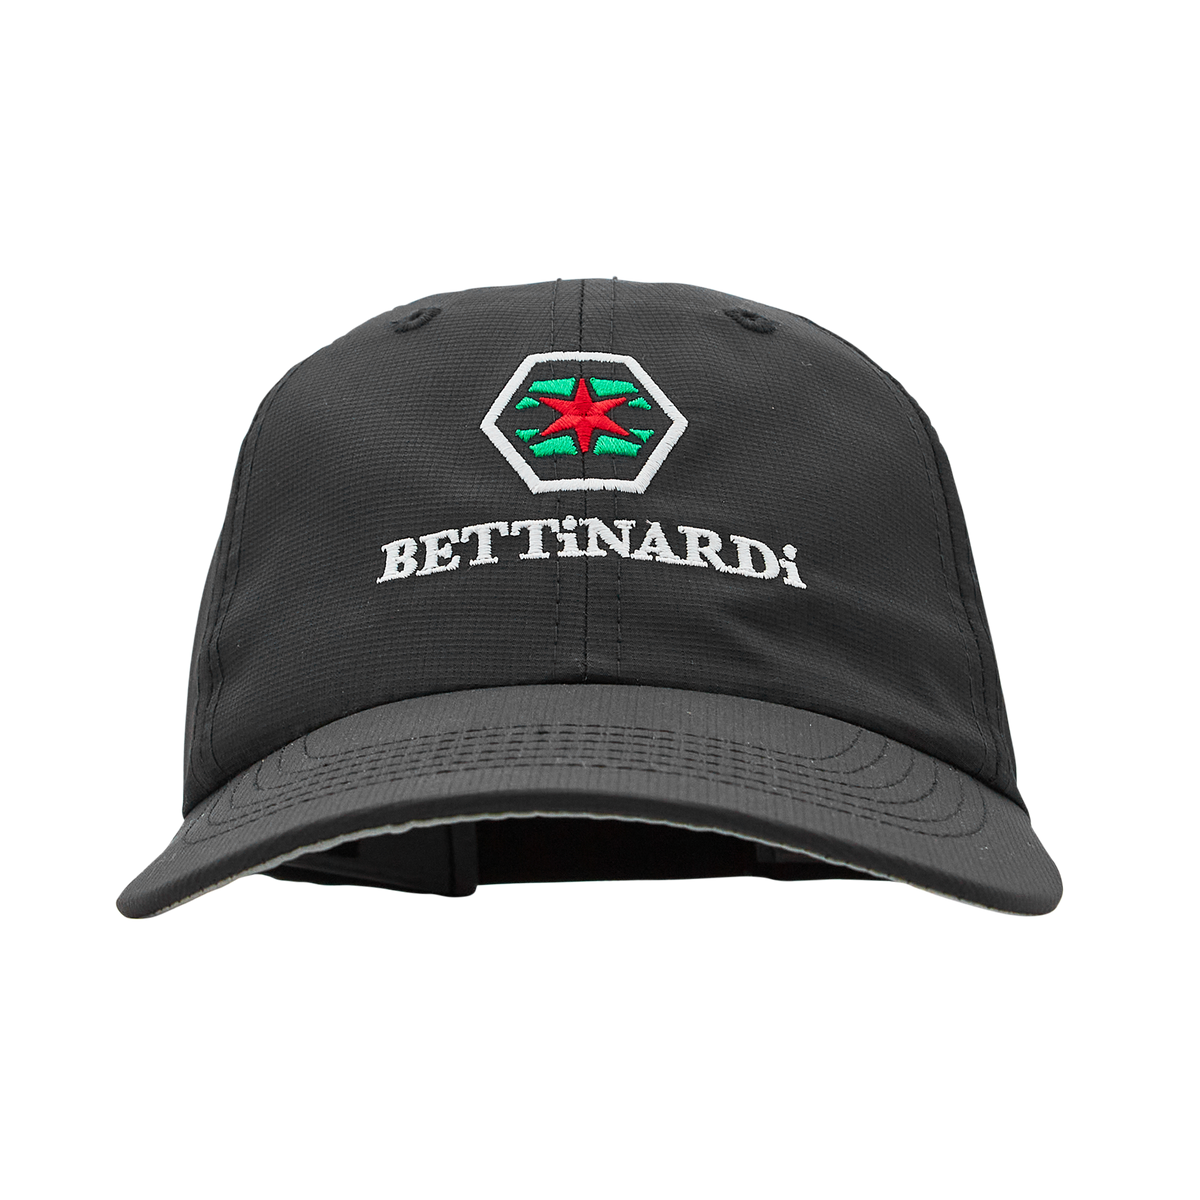 J.P. Graziano Performance Hat | – B Studio Bettinardi Golf